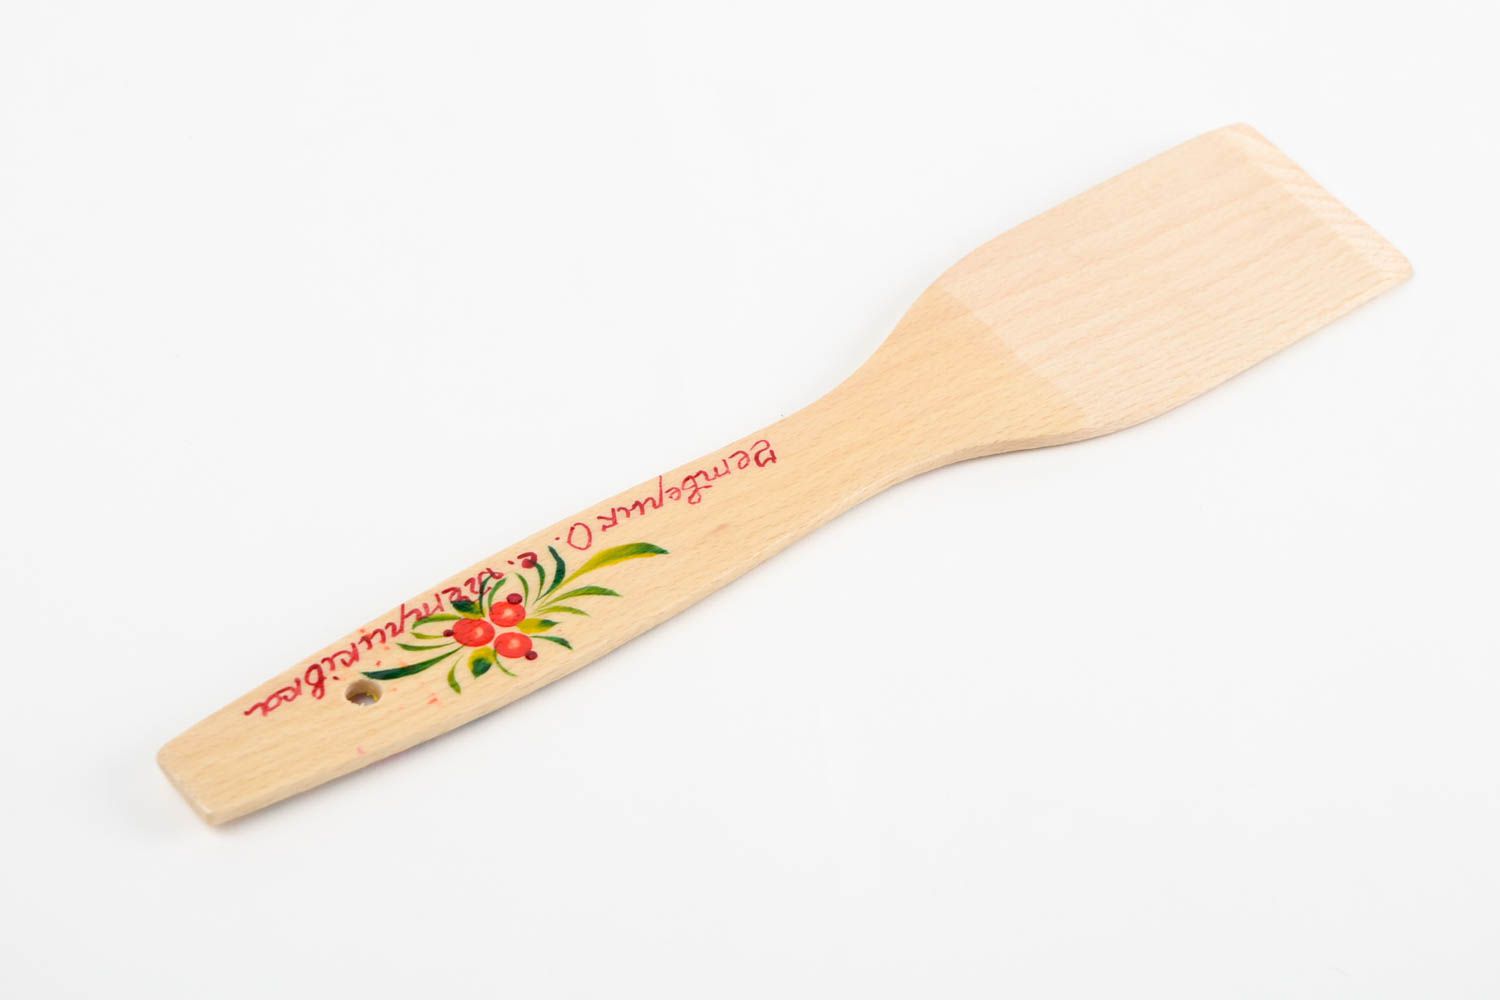 Handmade wooden spatula cooking tools kitchen utensils wood craft ideas photo 5